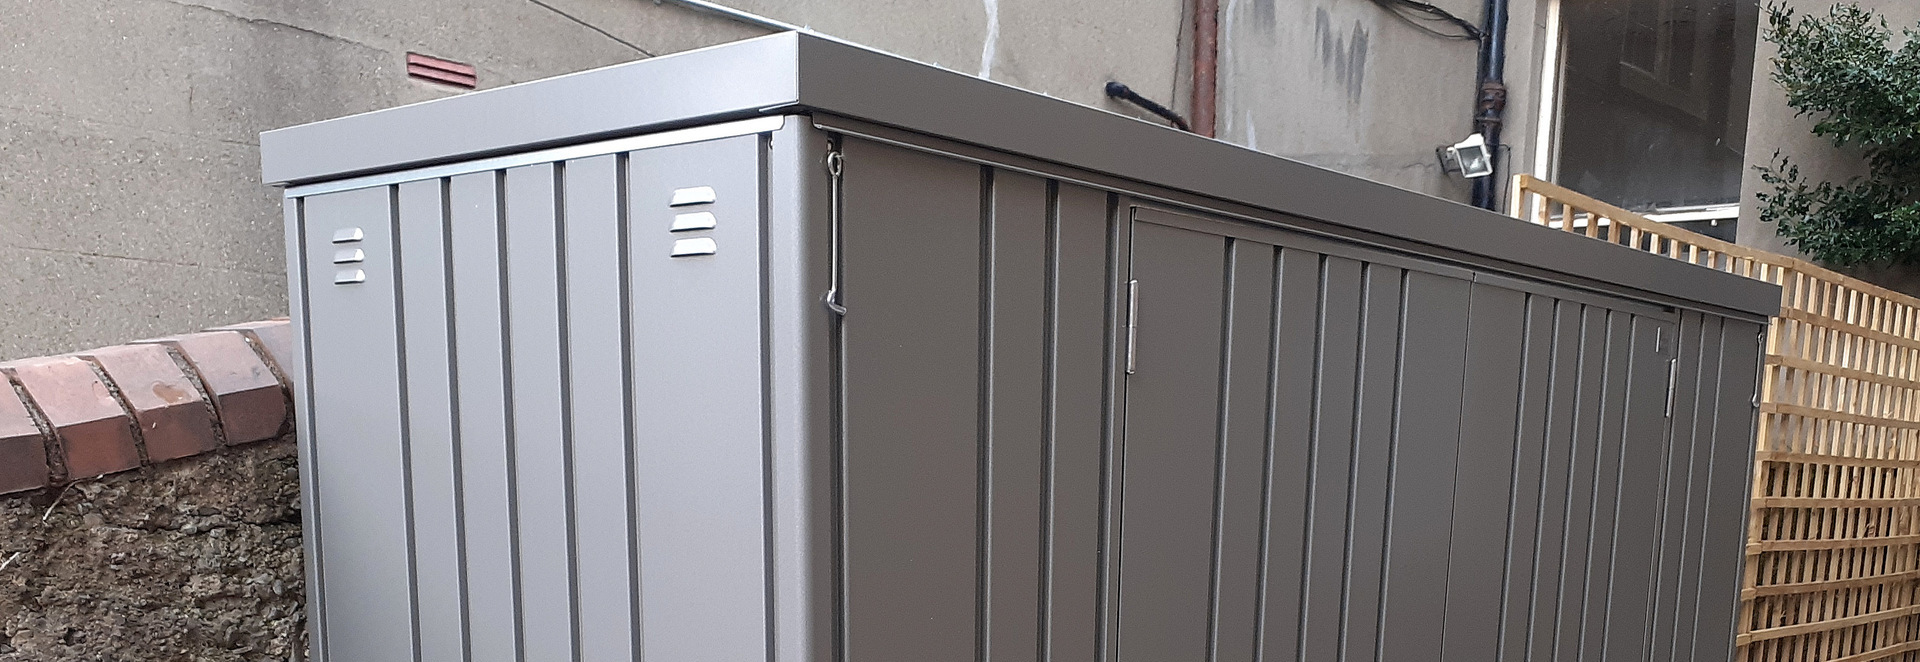 Biohort Equipment Locker 230 in metallic quartz grey | Supplied & Fitted in Rathgar, Dublin 6 by Owen Chubb | Tel 087-2306 128